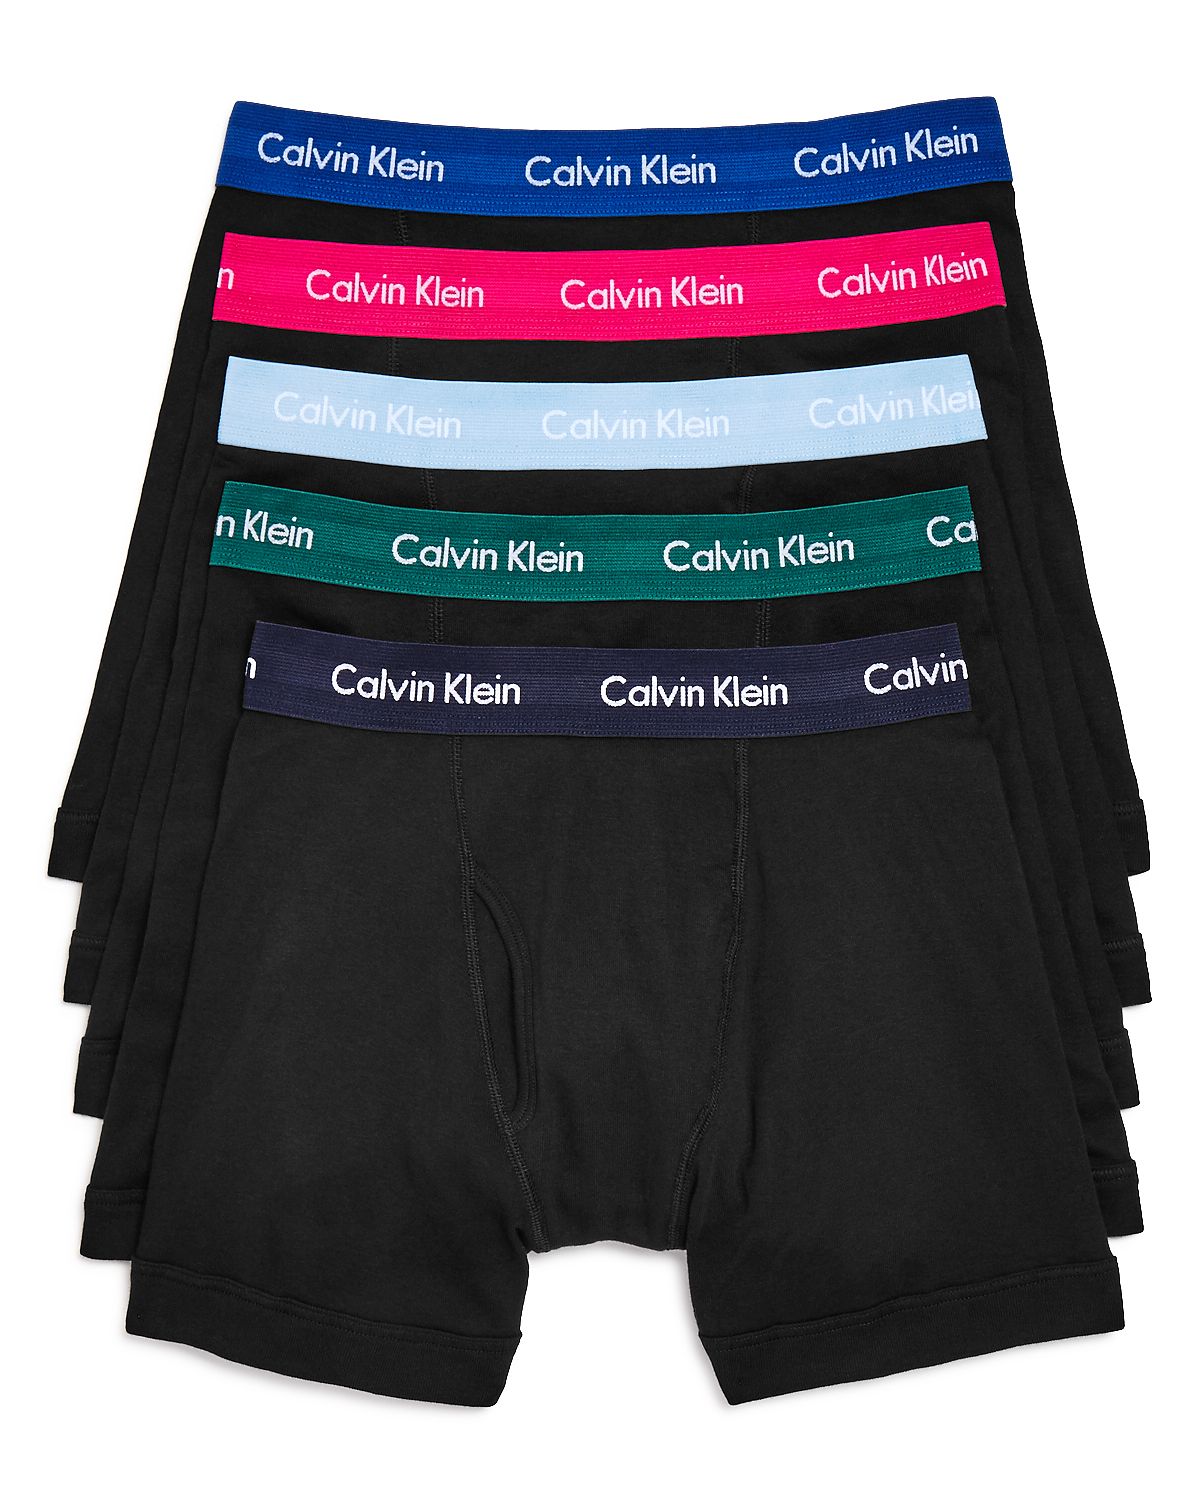 Calvin Klein Boxer Briefs Pack Of 5 Black/Blue/Hunter Green/Magenta/Royal